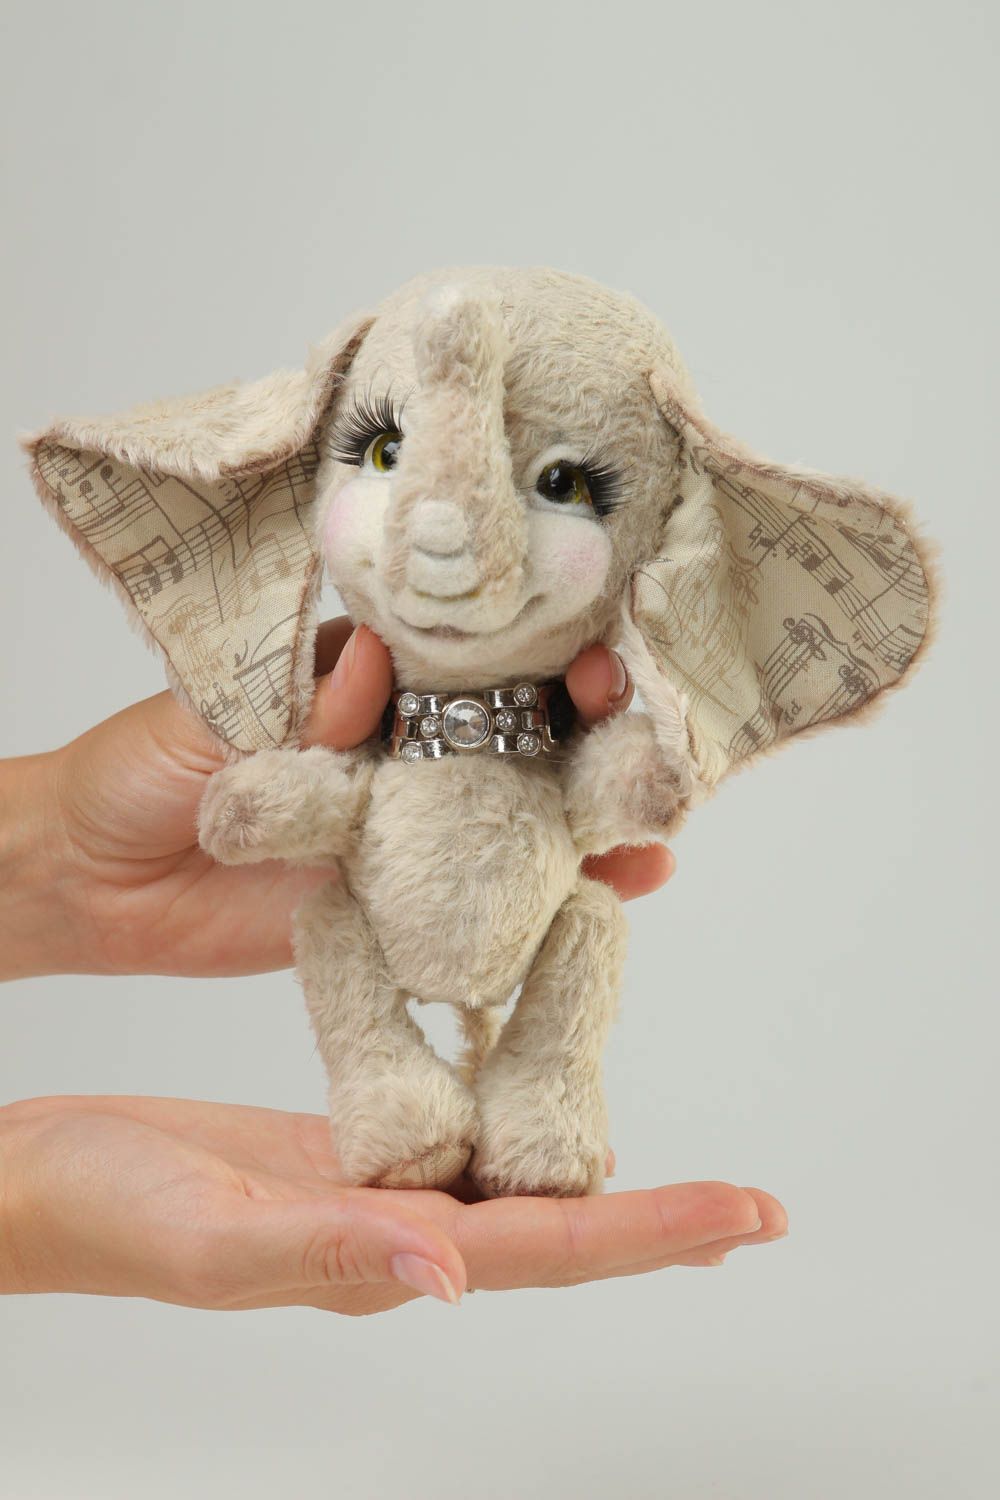 Handmade toy soft animal toy designer toy for baby nursery decor gift ideas photo 5